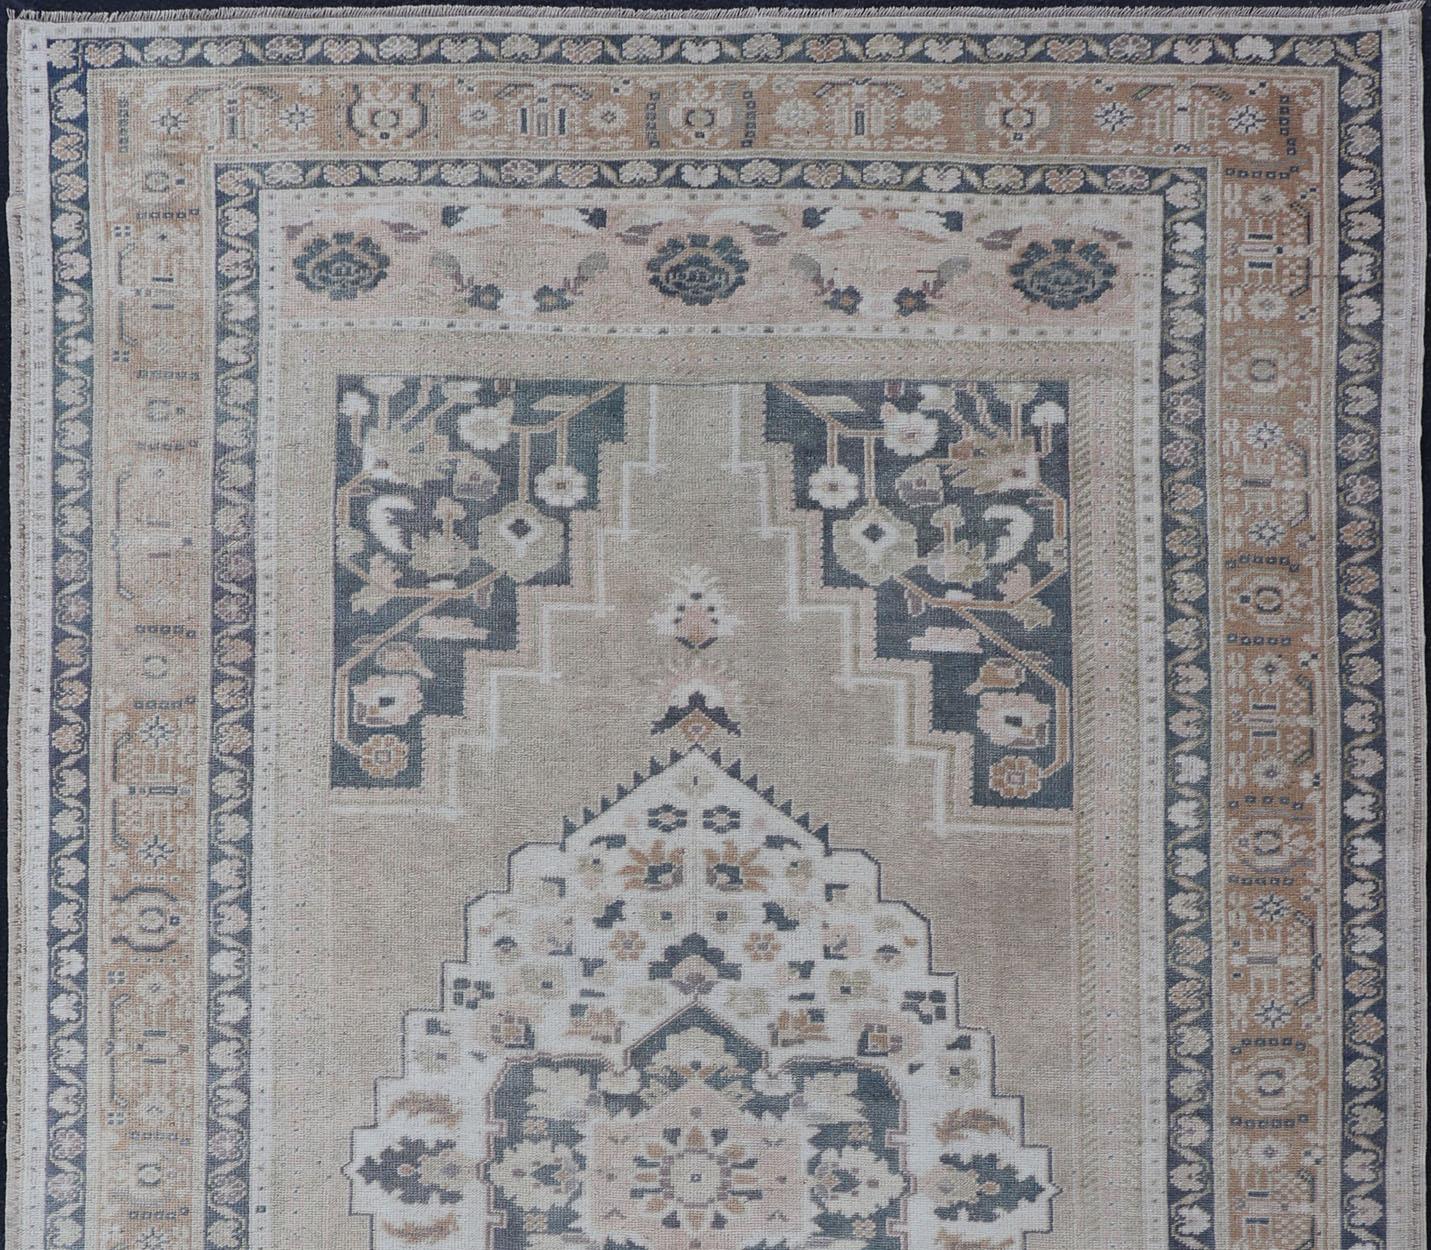 Vintage Oushak Turkish rug in cream, taupe and gray blue, Steel blue, Keivan Woven Arts/rug EN-178024, country of origin/type: Turkey / Oushak, circa 1940. Medallion oushak, Medallion vintage Turkish rug
Measures: 5'9 x 9'10.